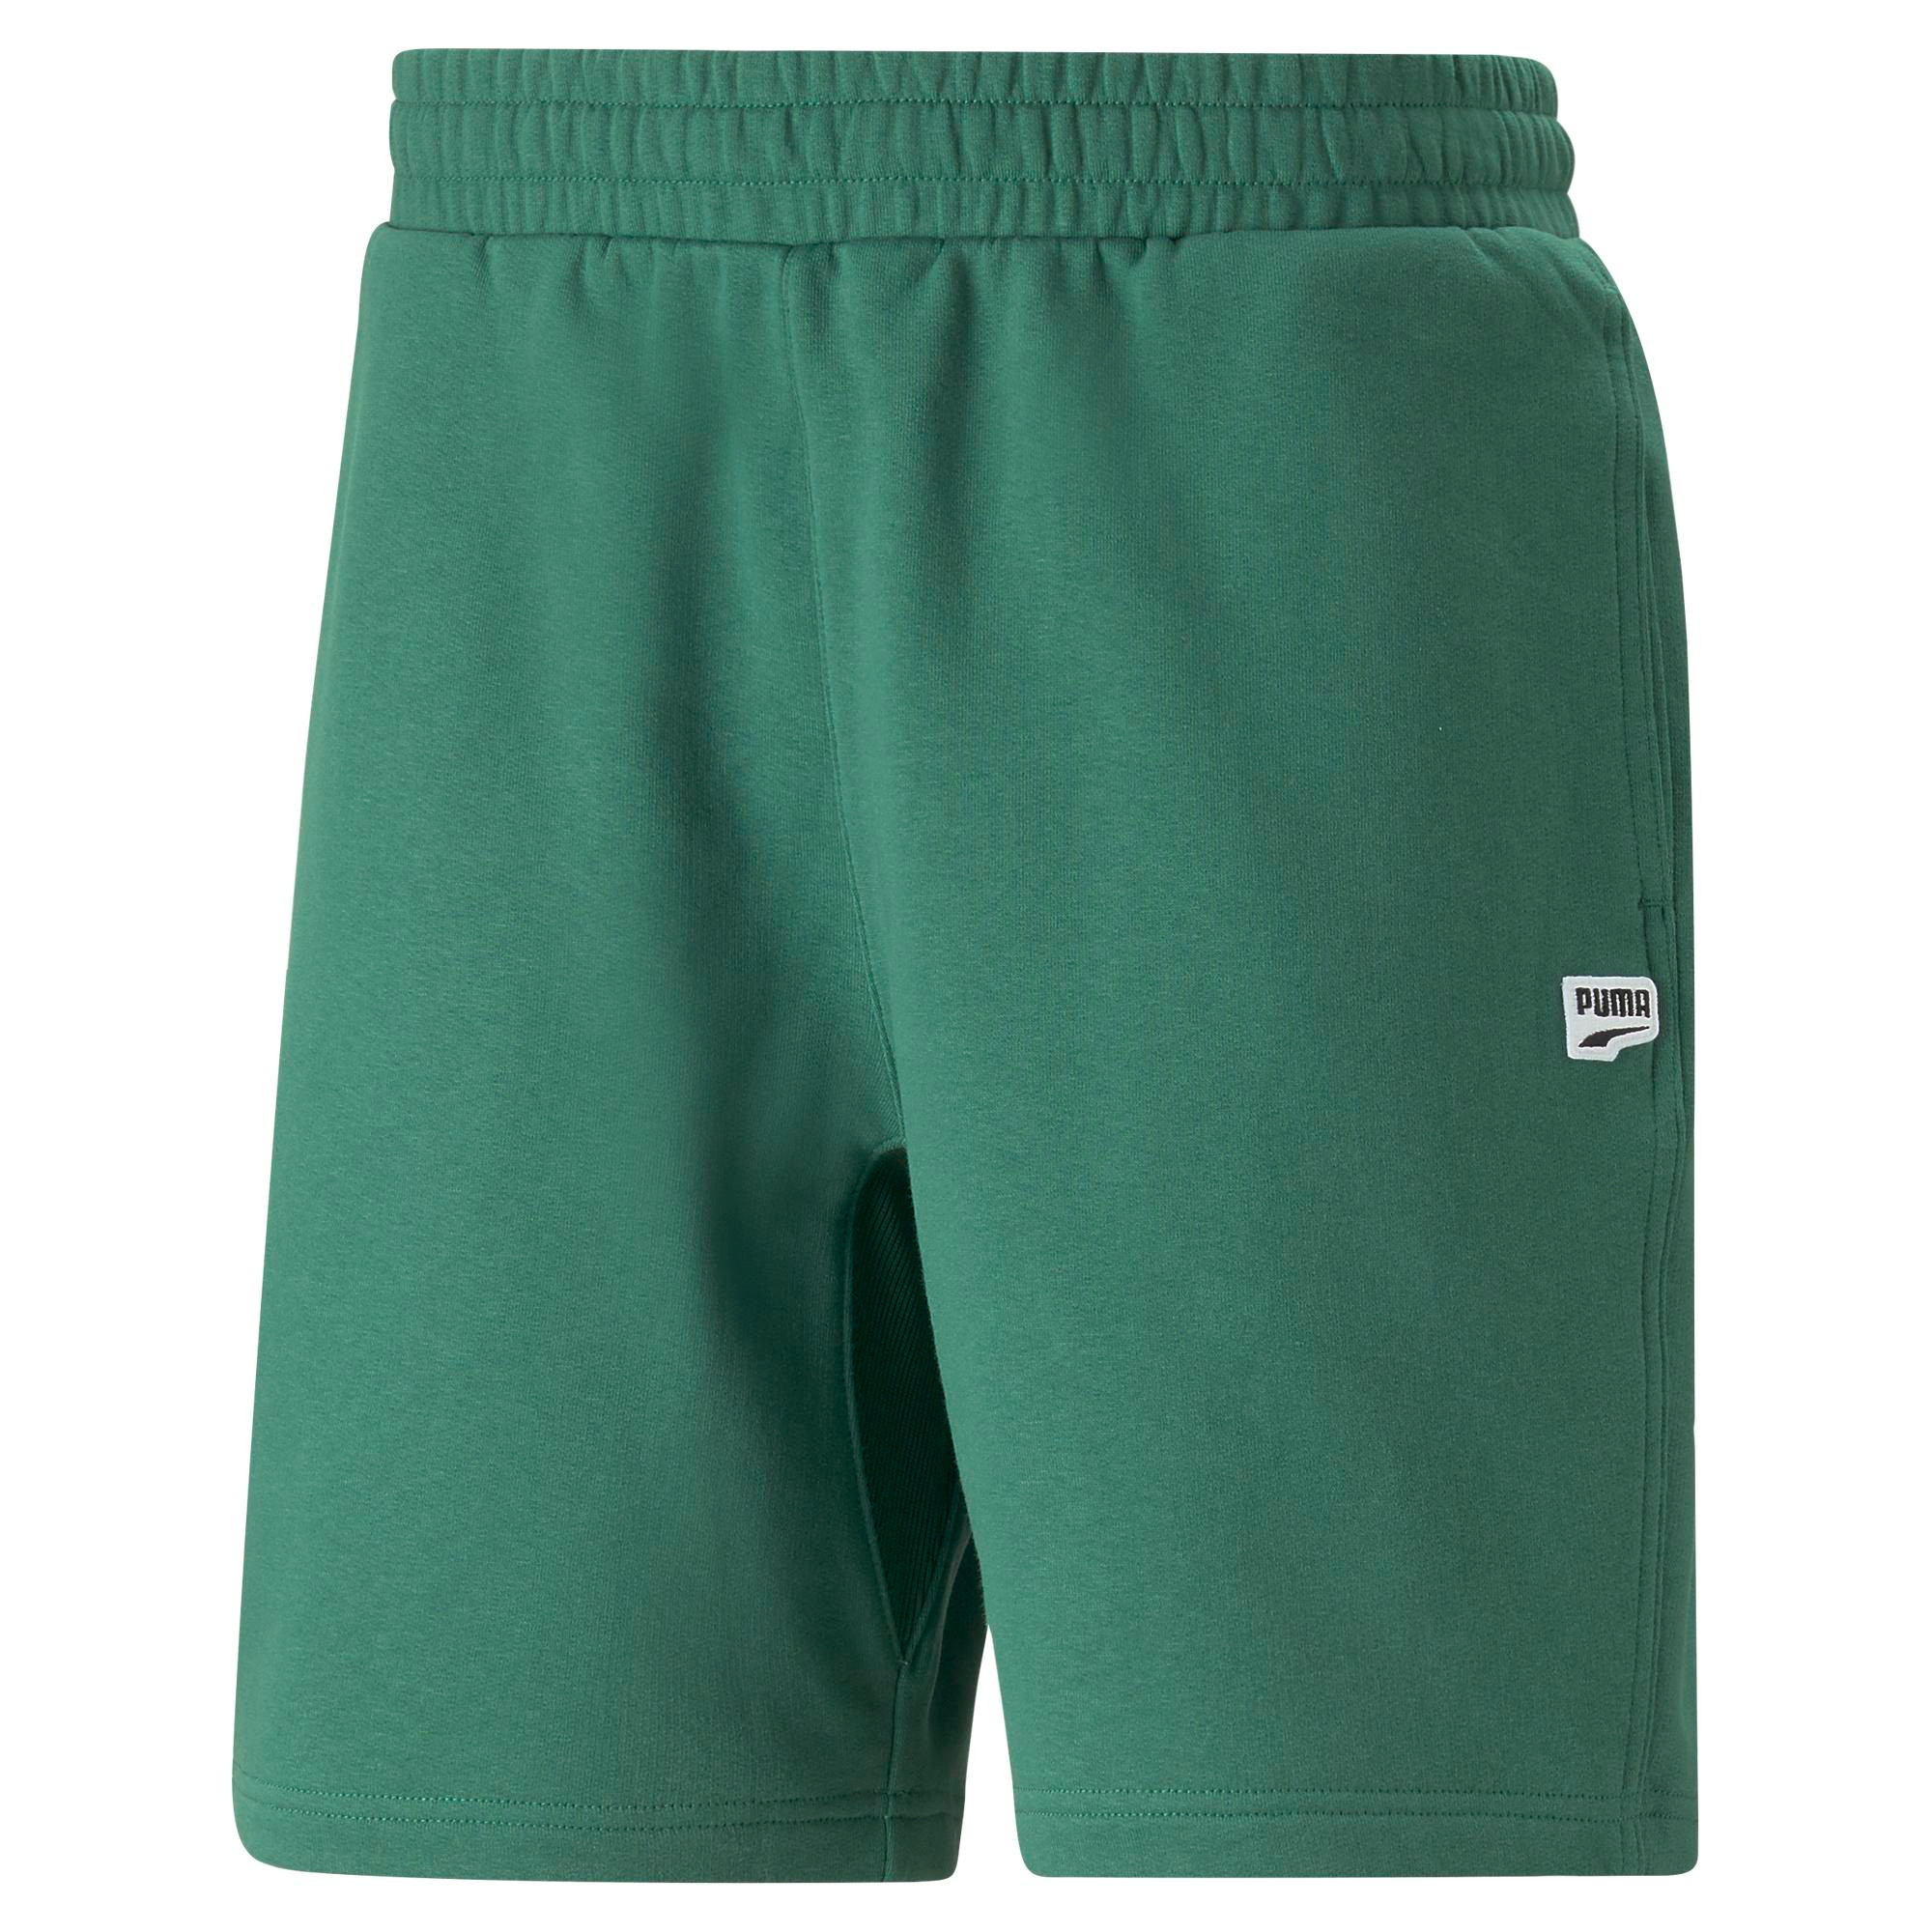 Puma - Cotton shorts, Green, large image number 0